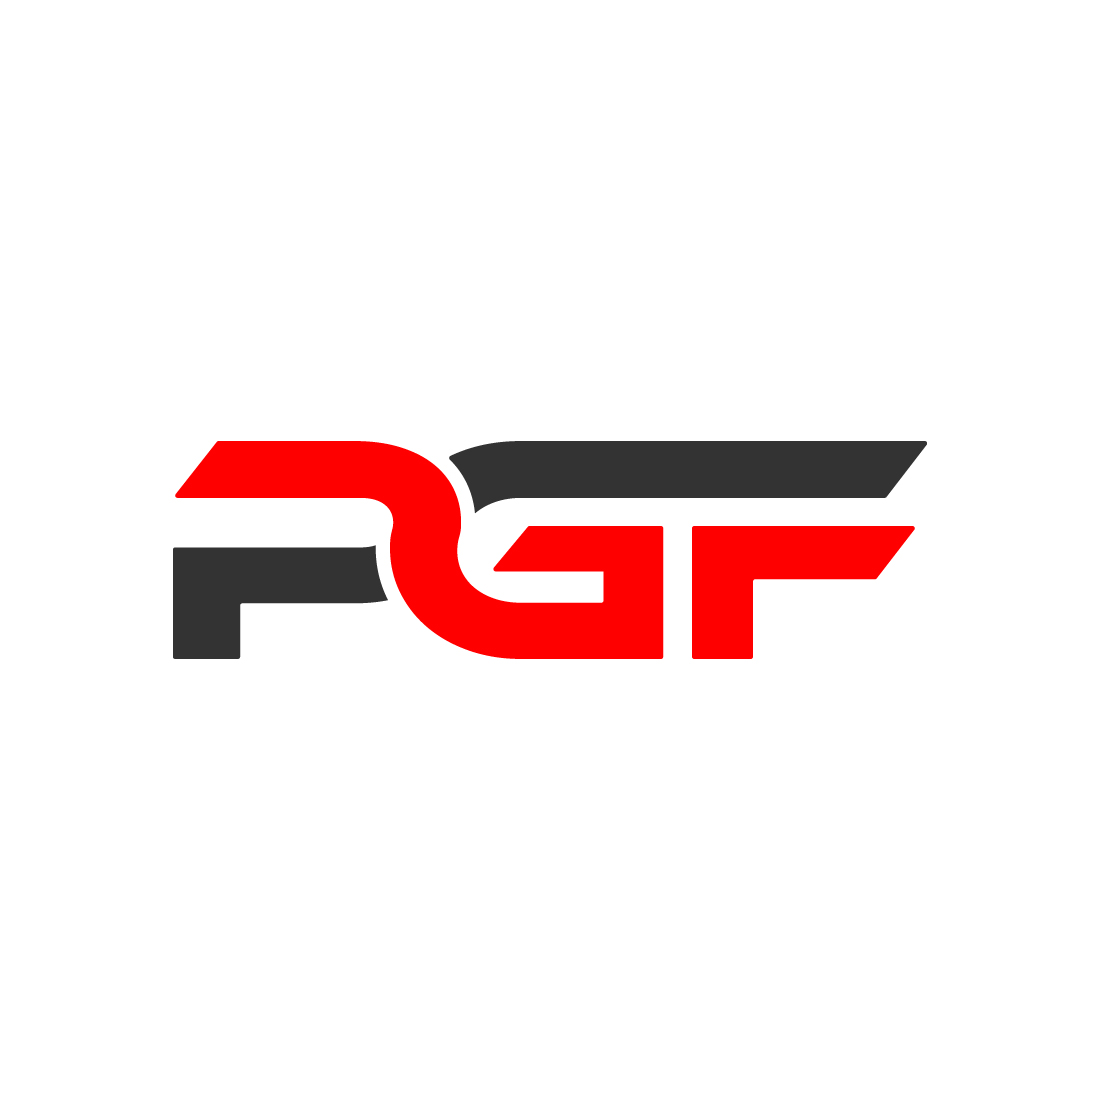 PGF letters logo design victor images FGP logo monogram best identity Professional letters logo design best identity preview image.